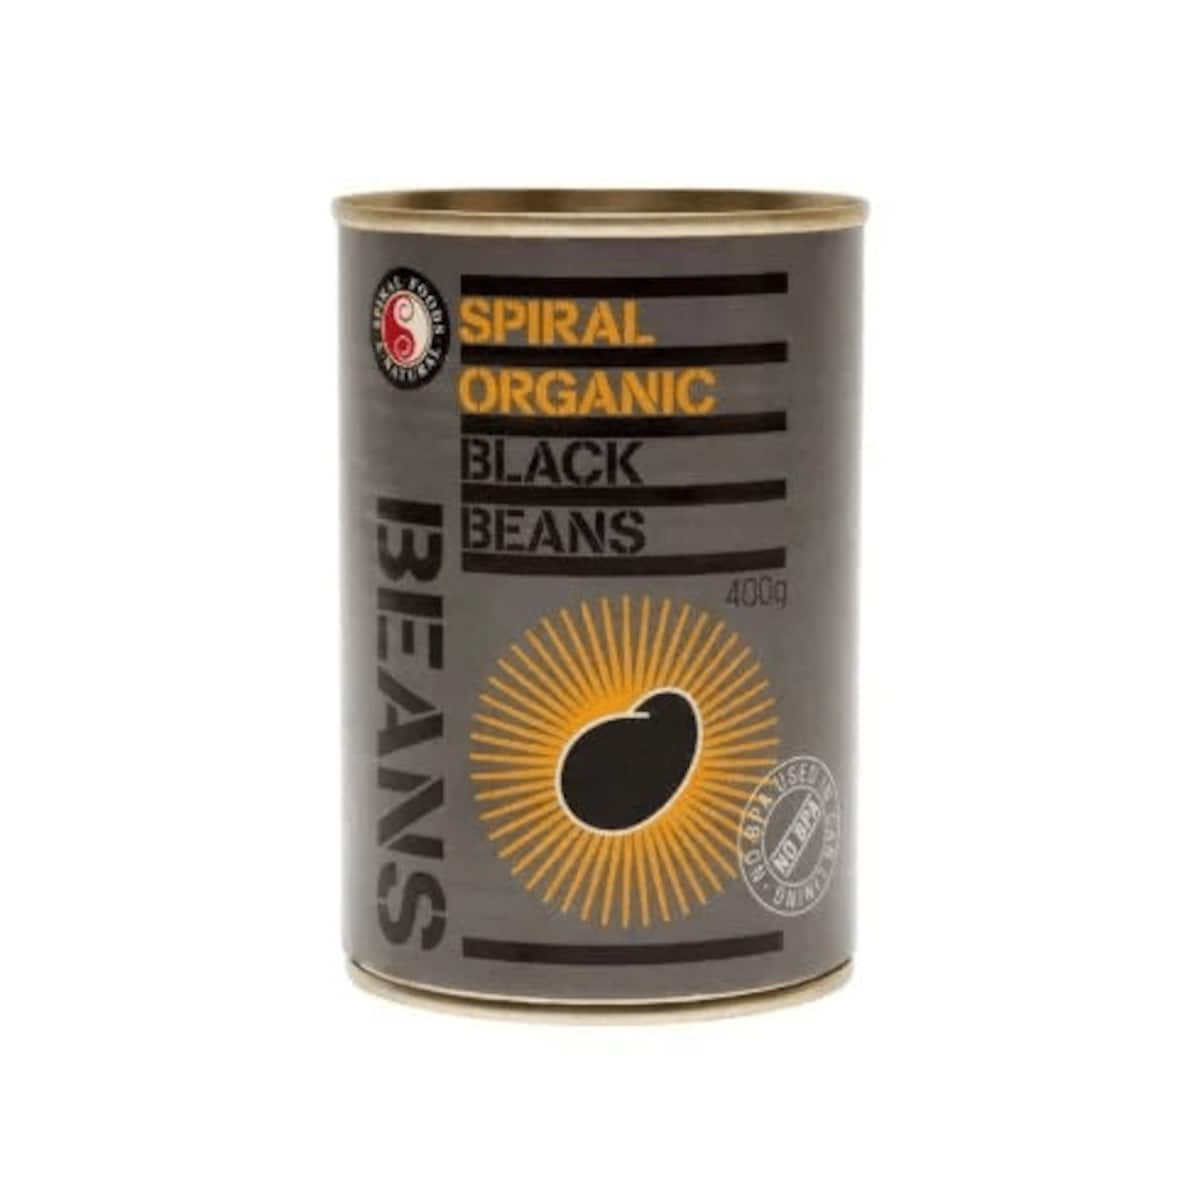 Spiral Organic Black Beans 6 x 400g